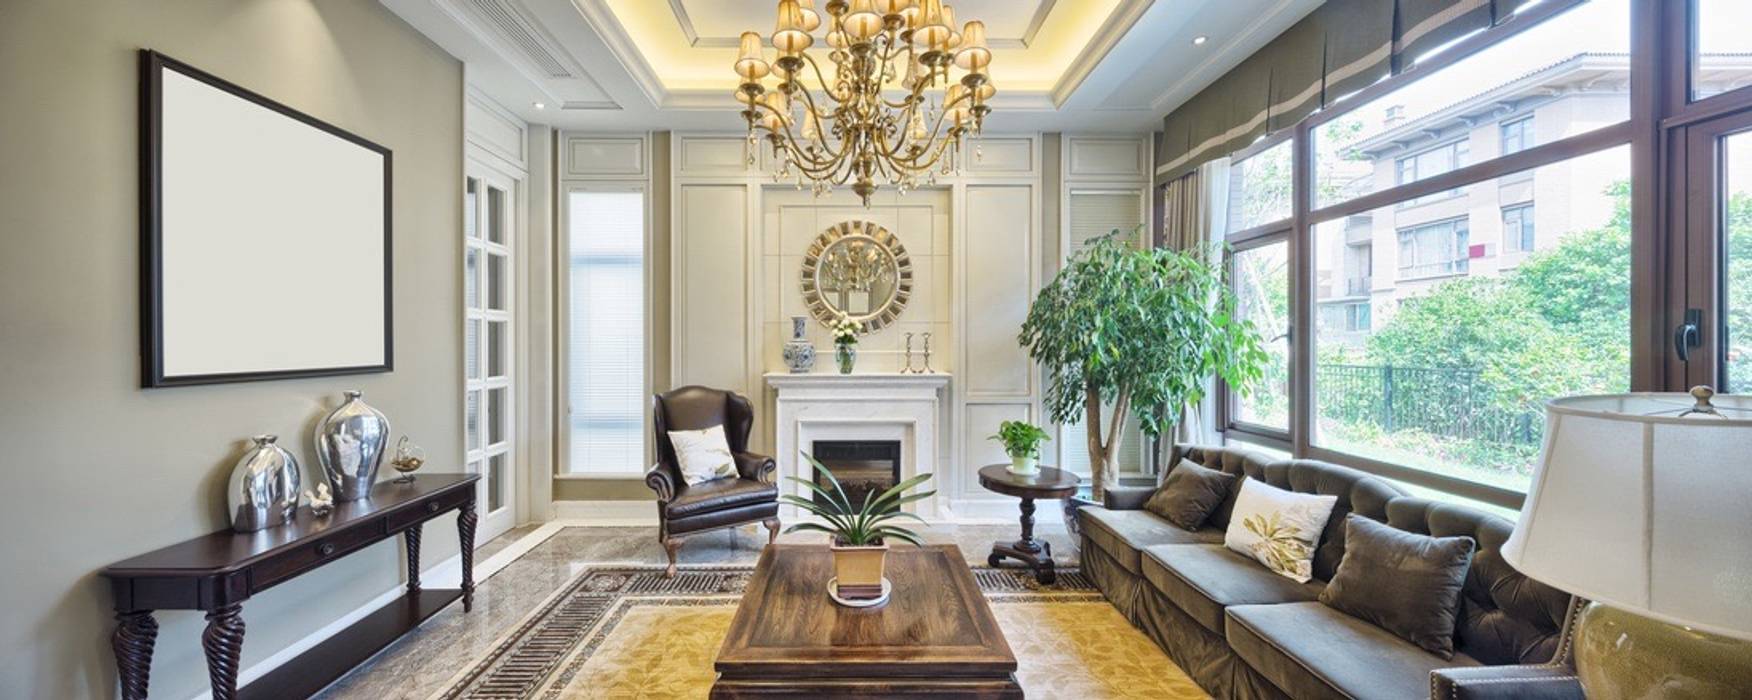 Statement Chandelier Gracious Luxury Interiors Salas de estilo clásico